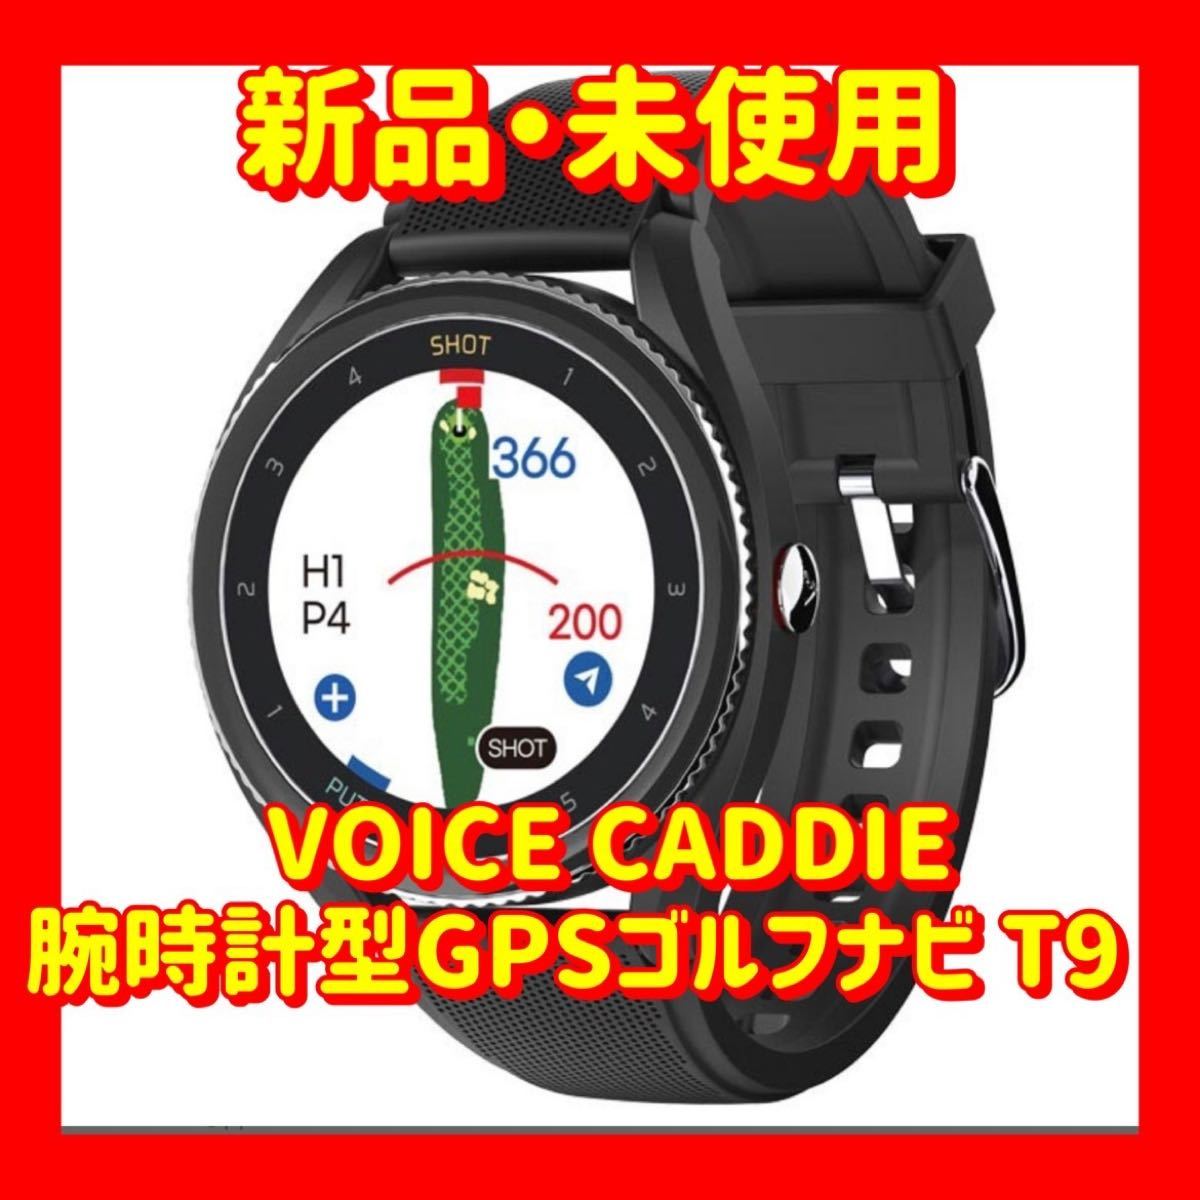 VOICE CADDIE ボイスキャディ 腕時計型GPSゴルフナビ T9｜PayPayフリマ